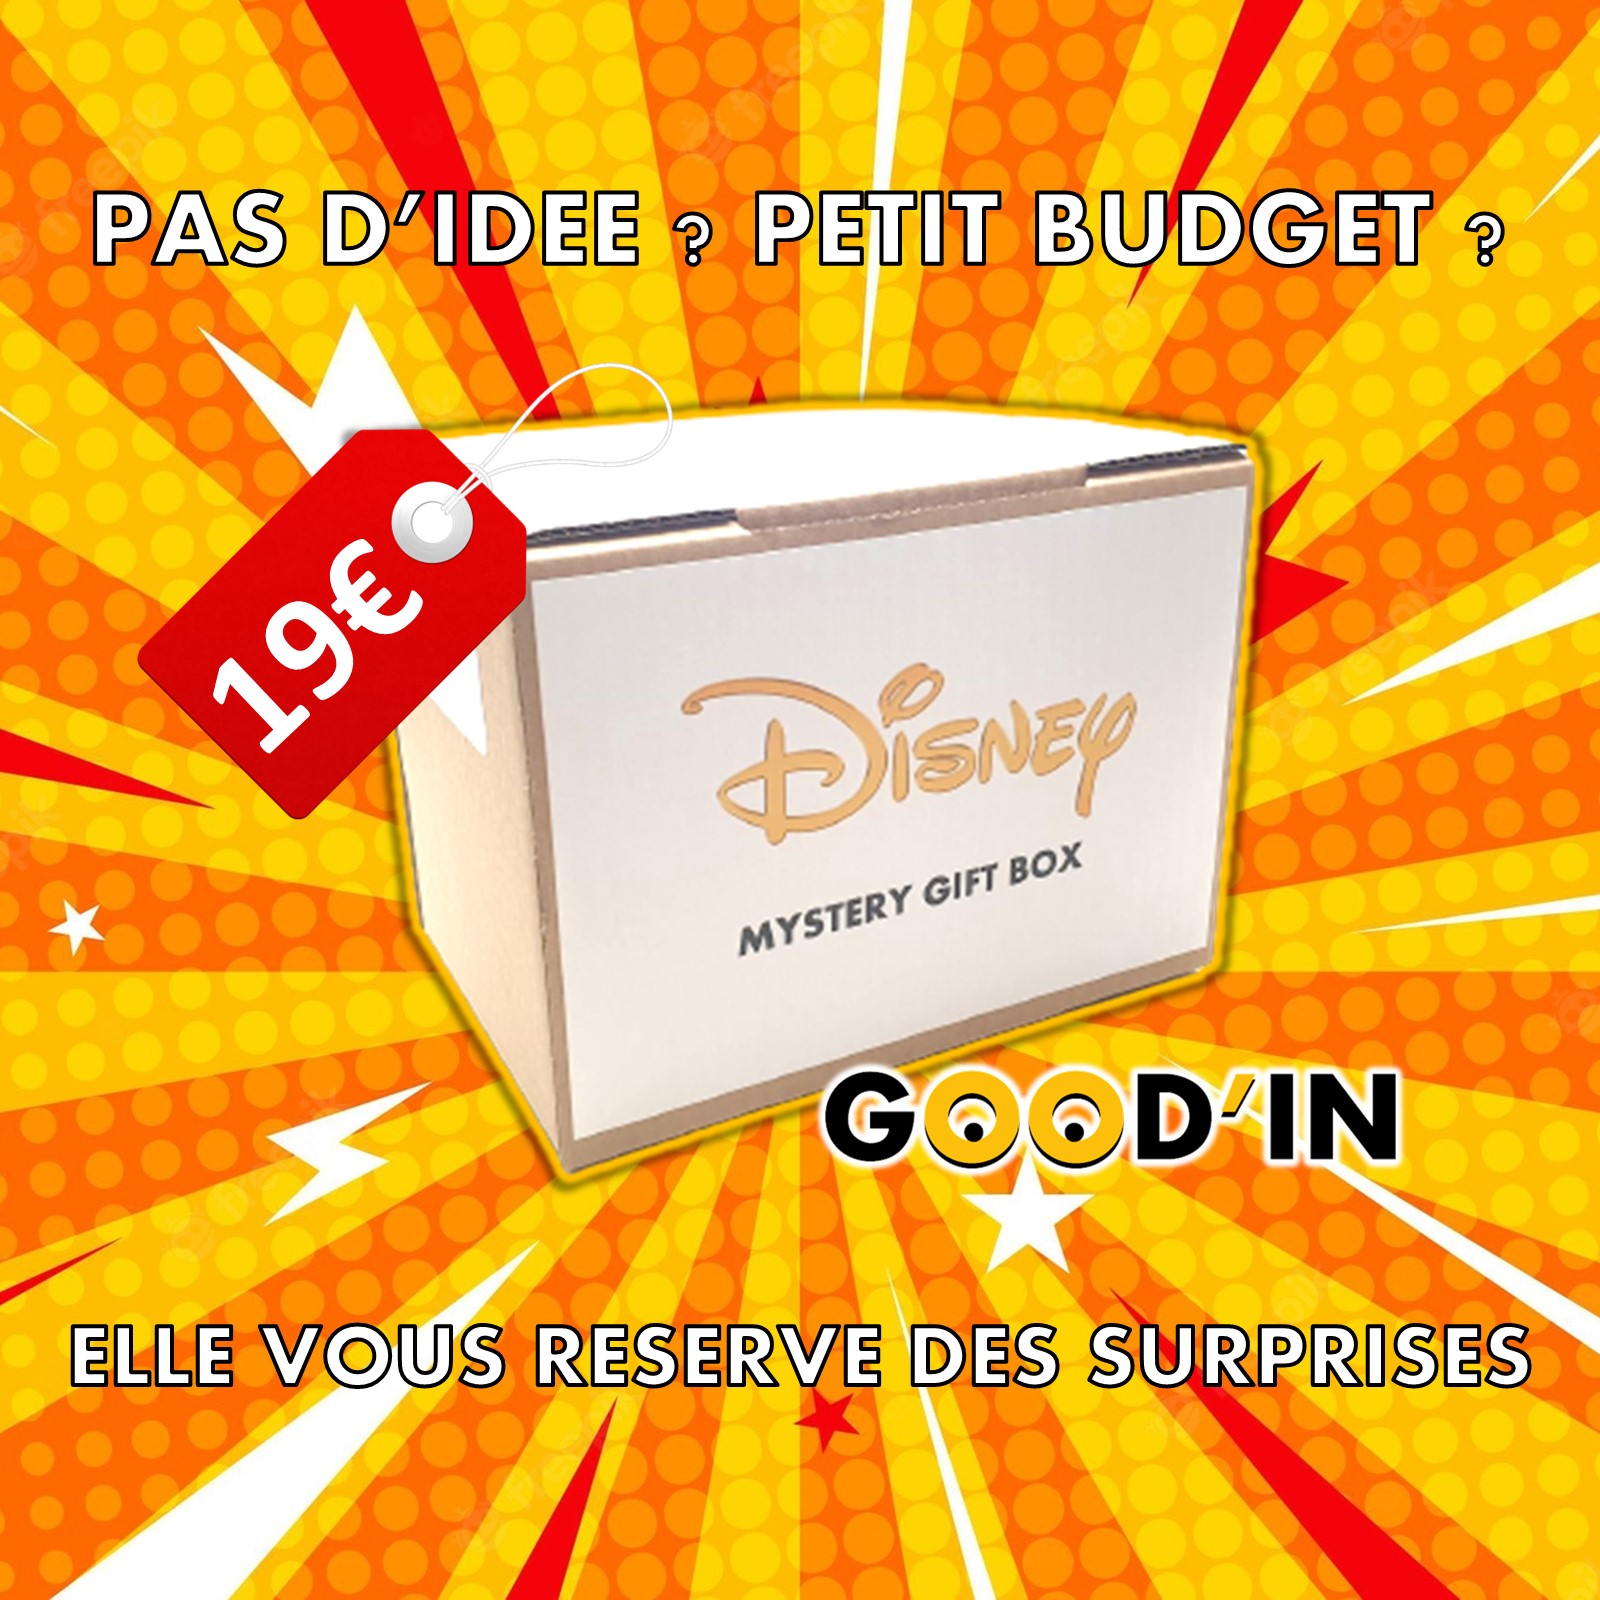 Box mstere cadeau Disney goodin shop